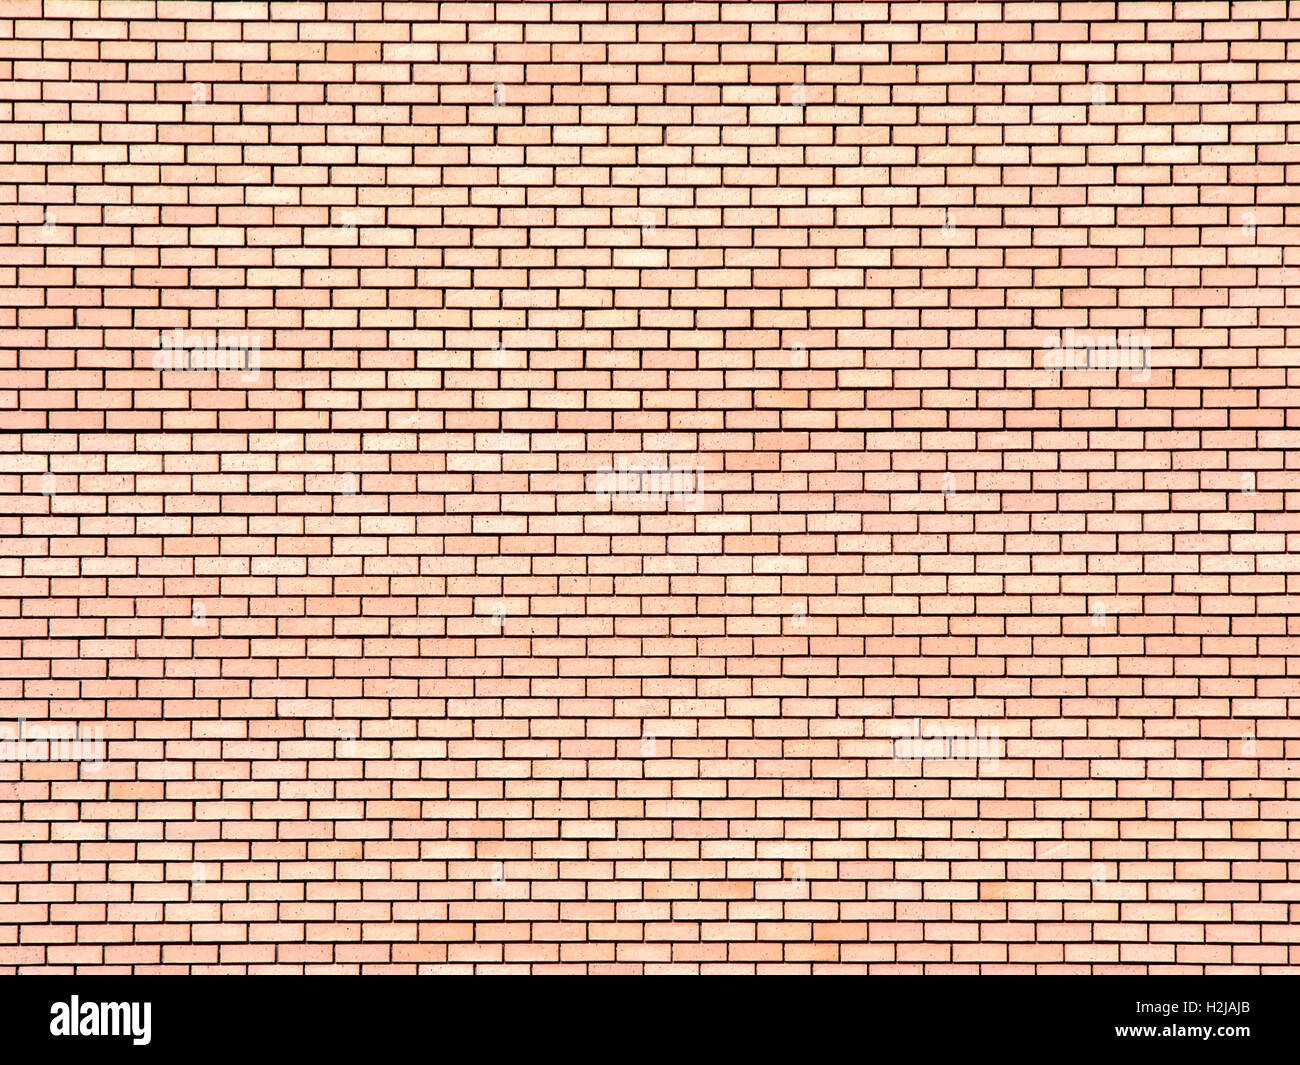 brick wall Stock Photo